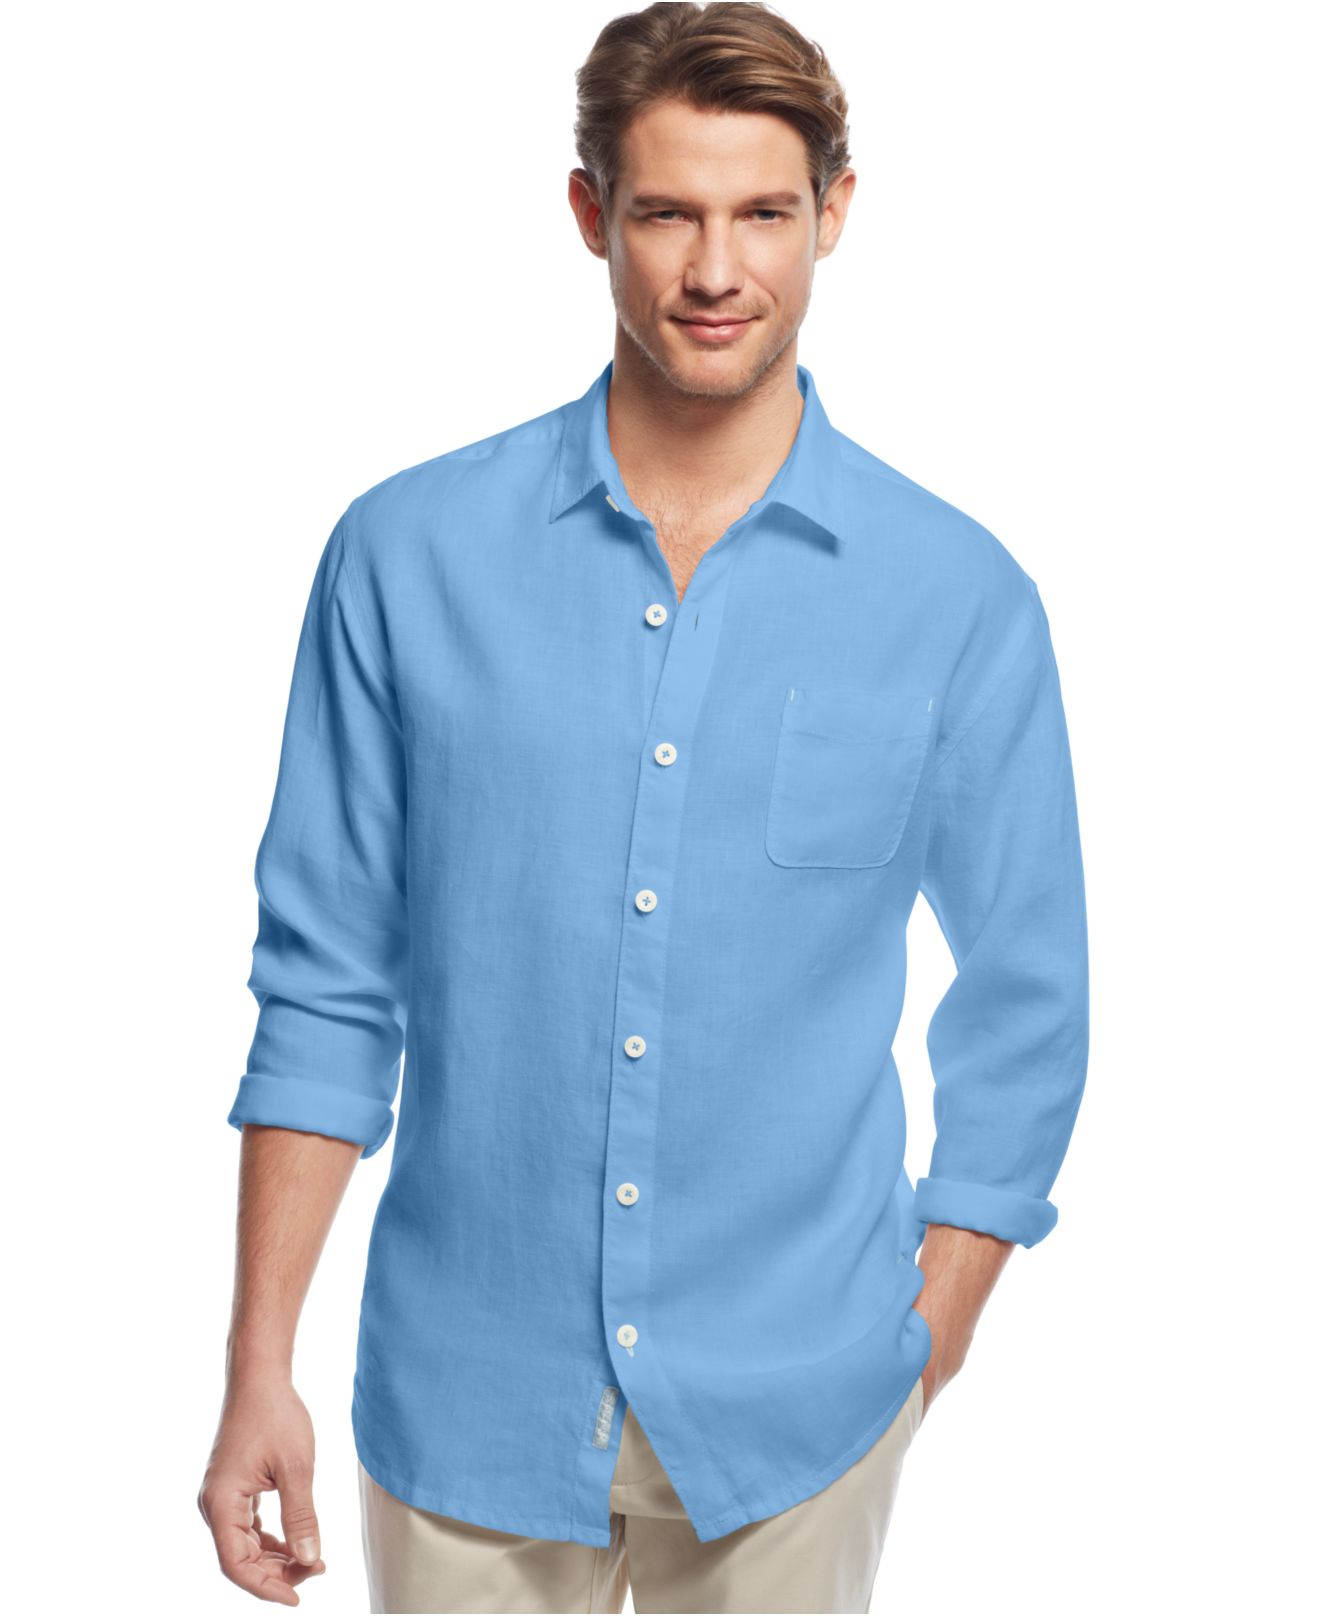 Lyst - Tommy Bahama Men's Sea Glass Breezer Linen Shirt in Blue for Men